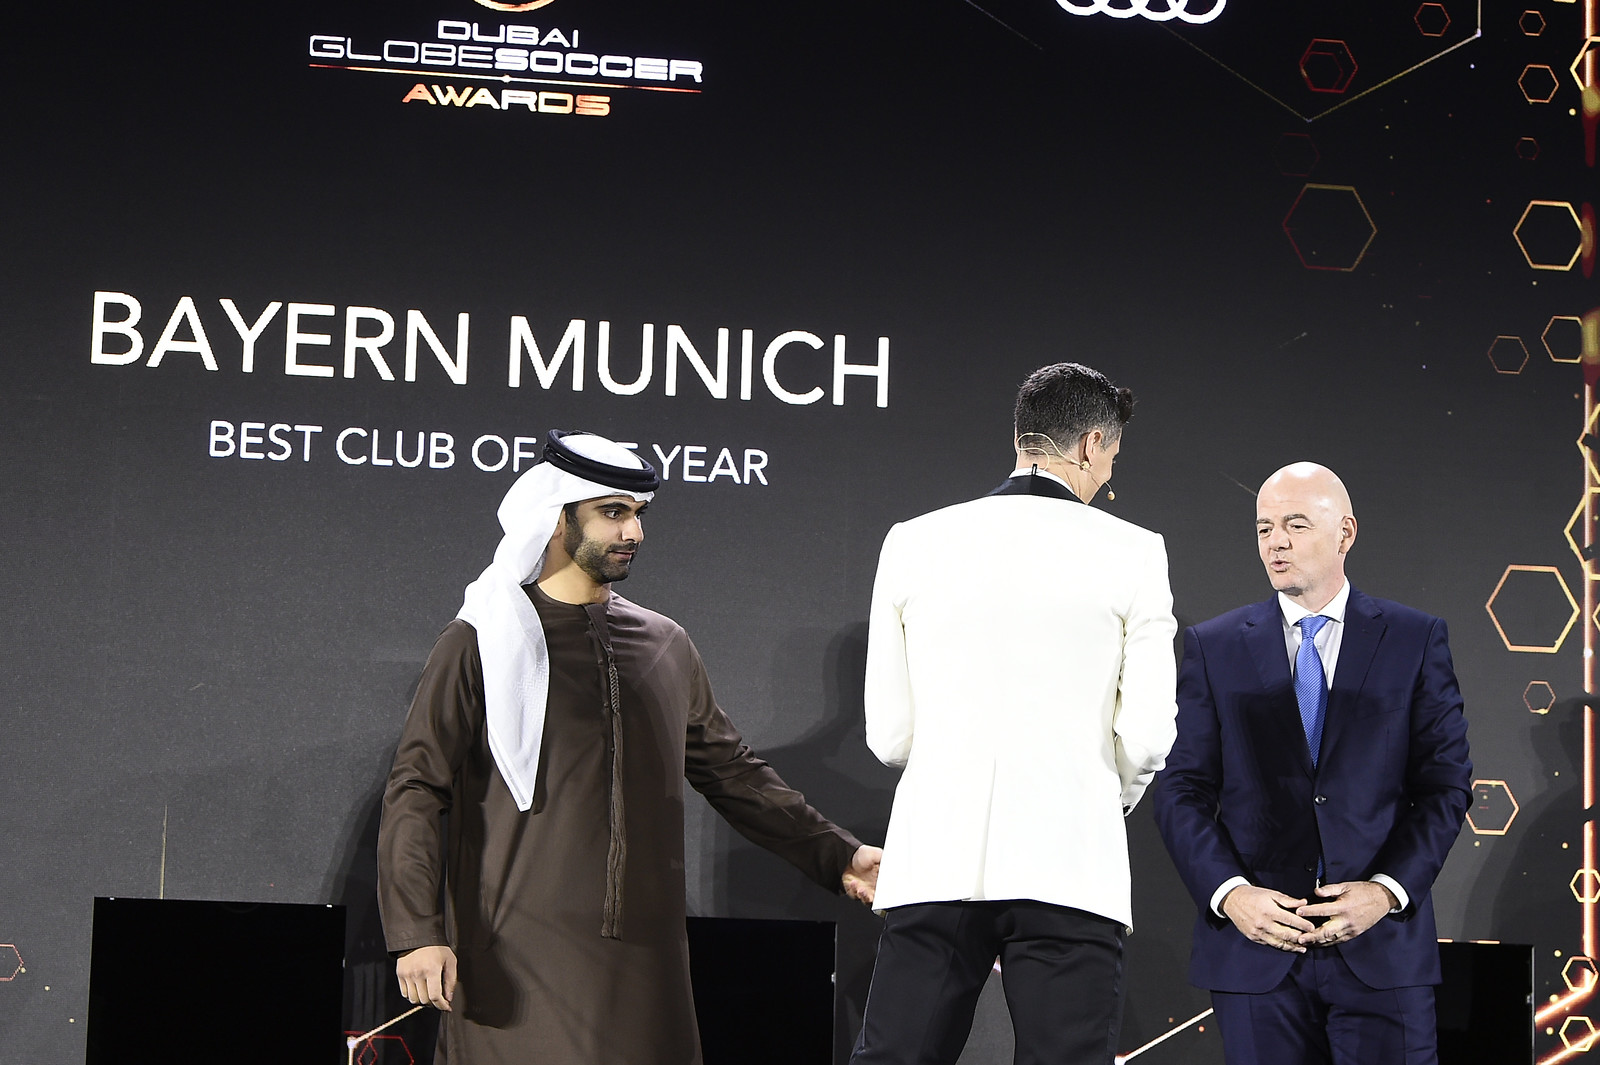 Dubai Globe Soccer Award 2020 - Dodicesima Edizione.